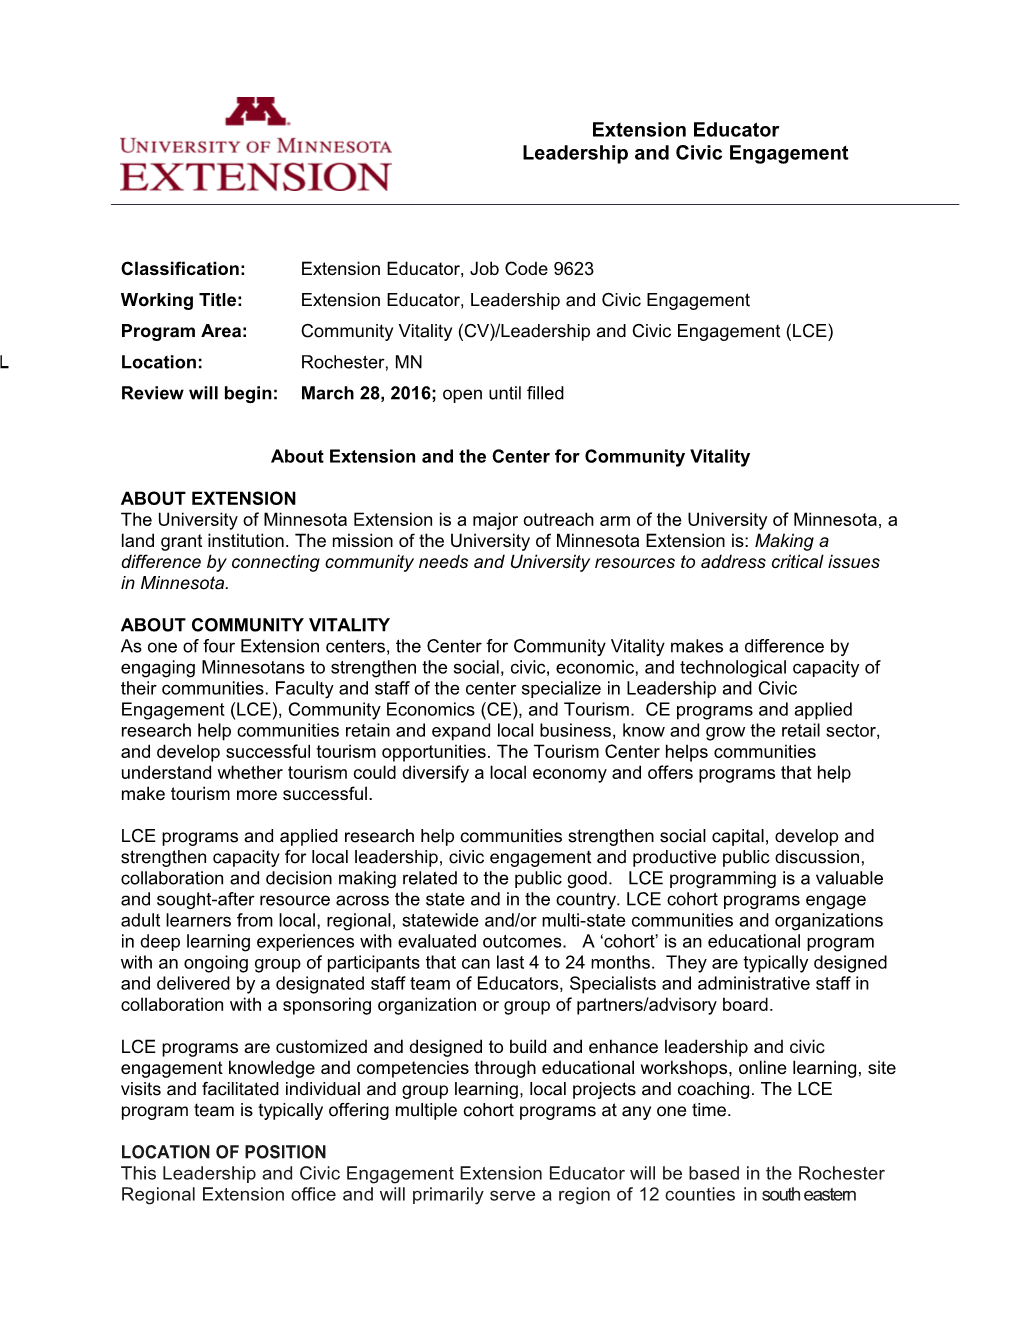 Classification: Extension Educator, Job Code 9623